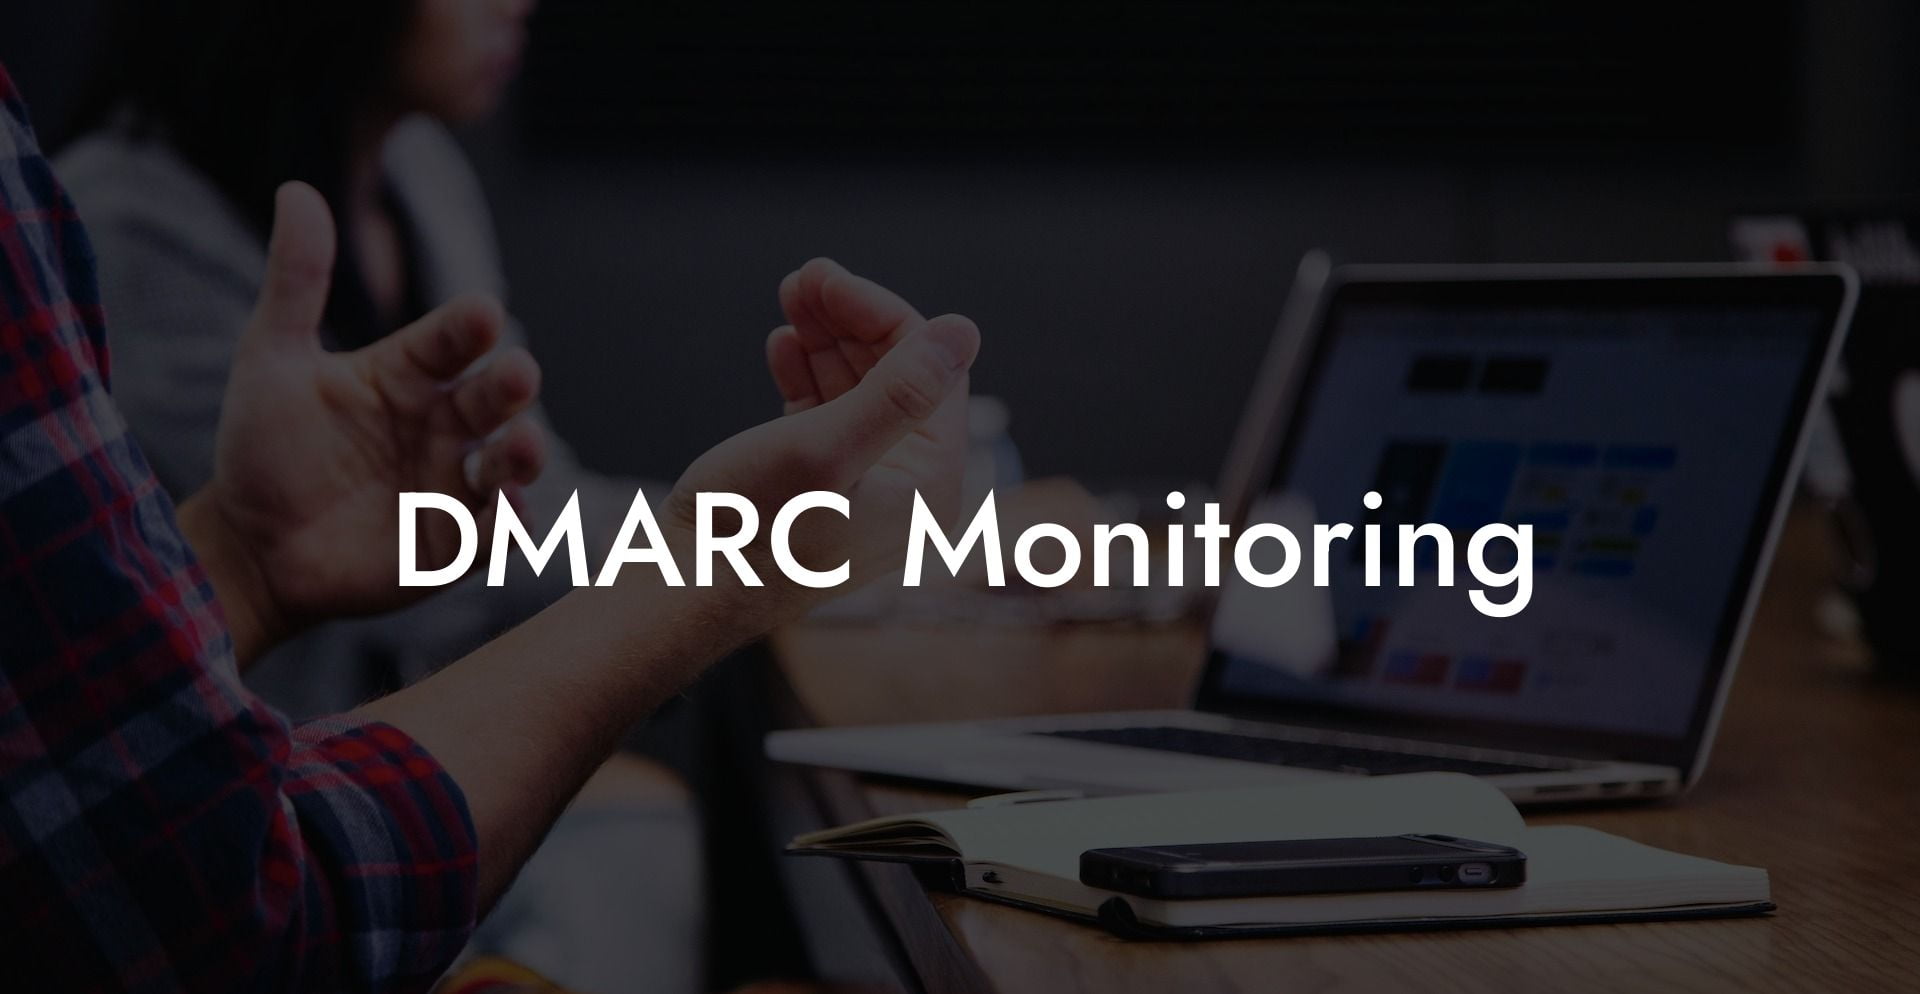 DMARC Monitoring